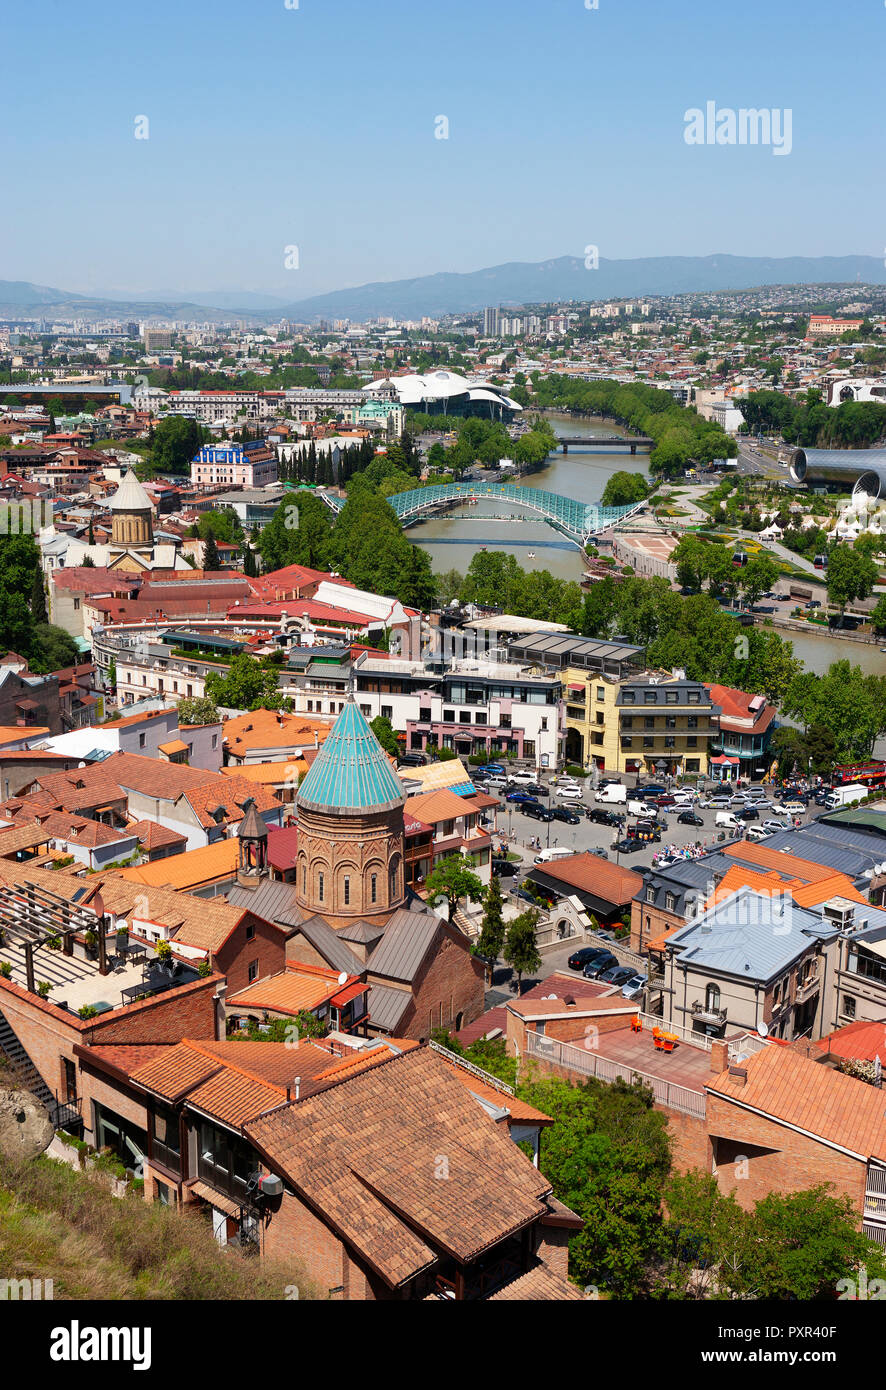 Georgia, Tbilisi, City view with Kura river Stock Photo